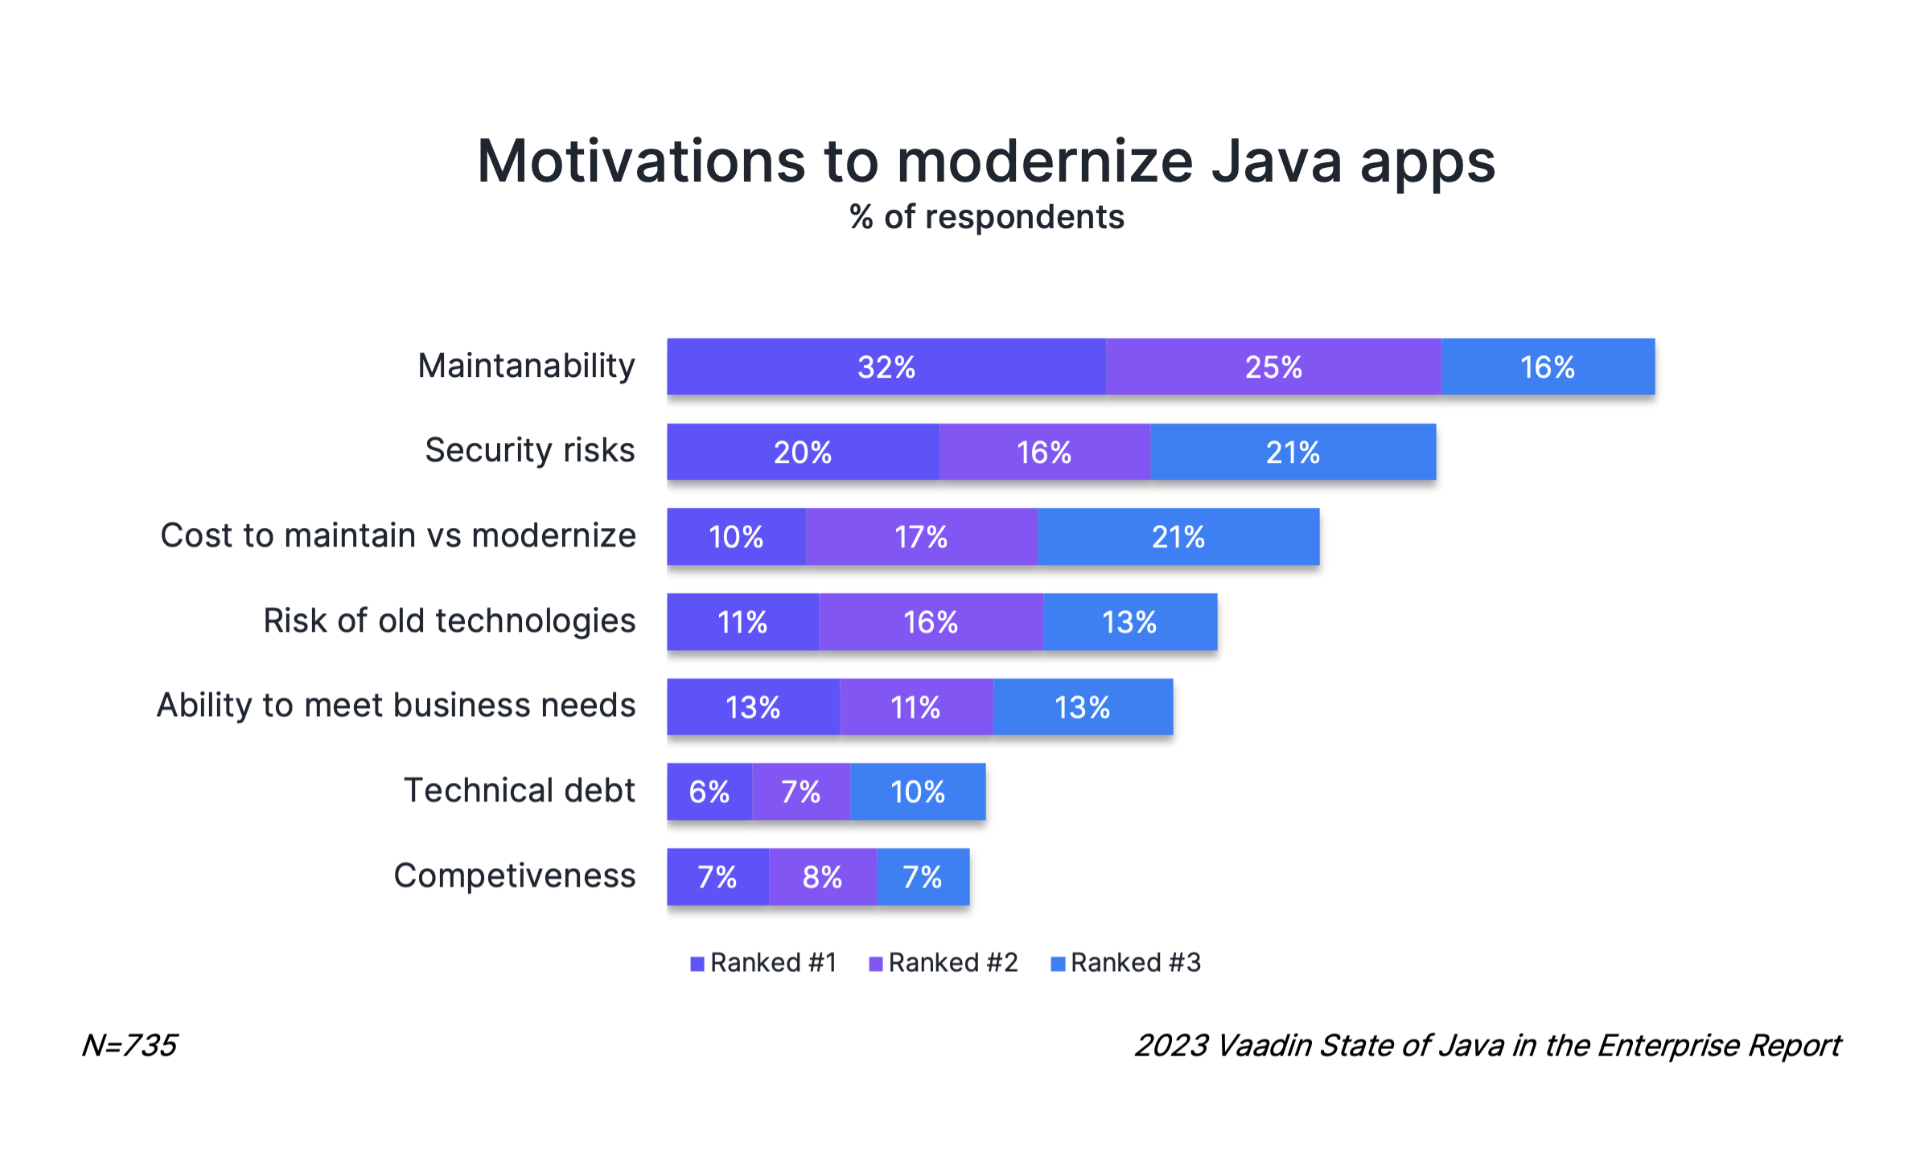 Bar chart showing the top motivators for application modernization.